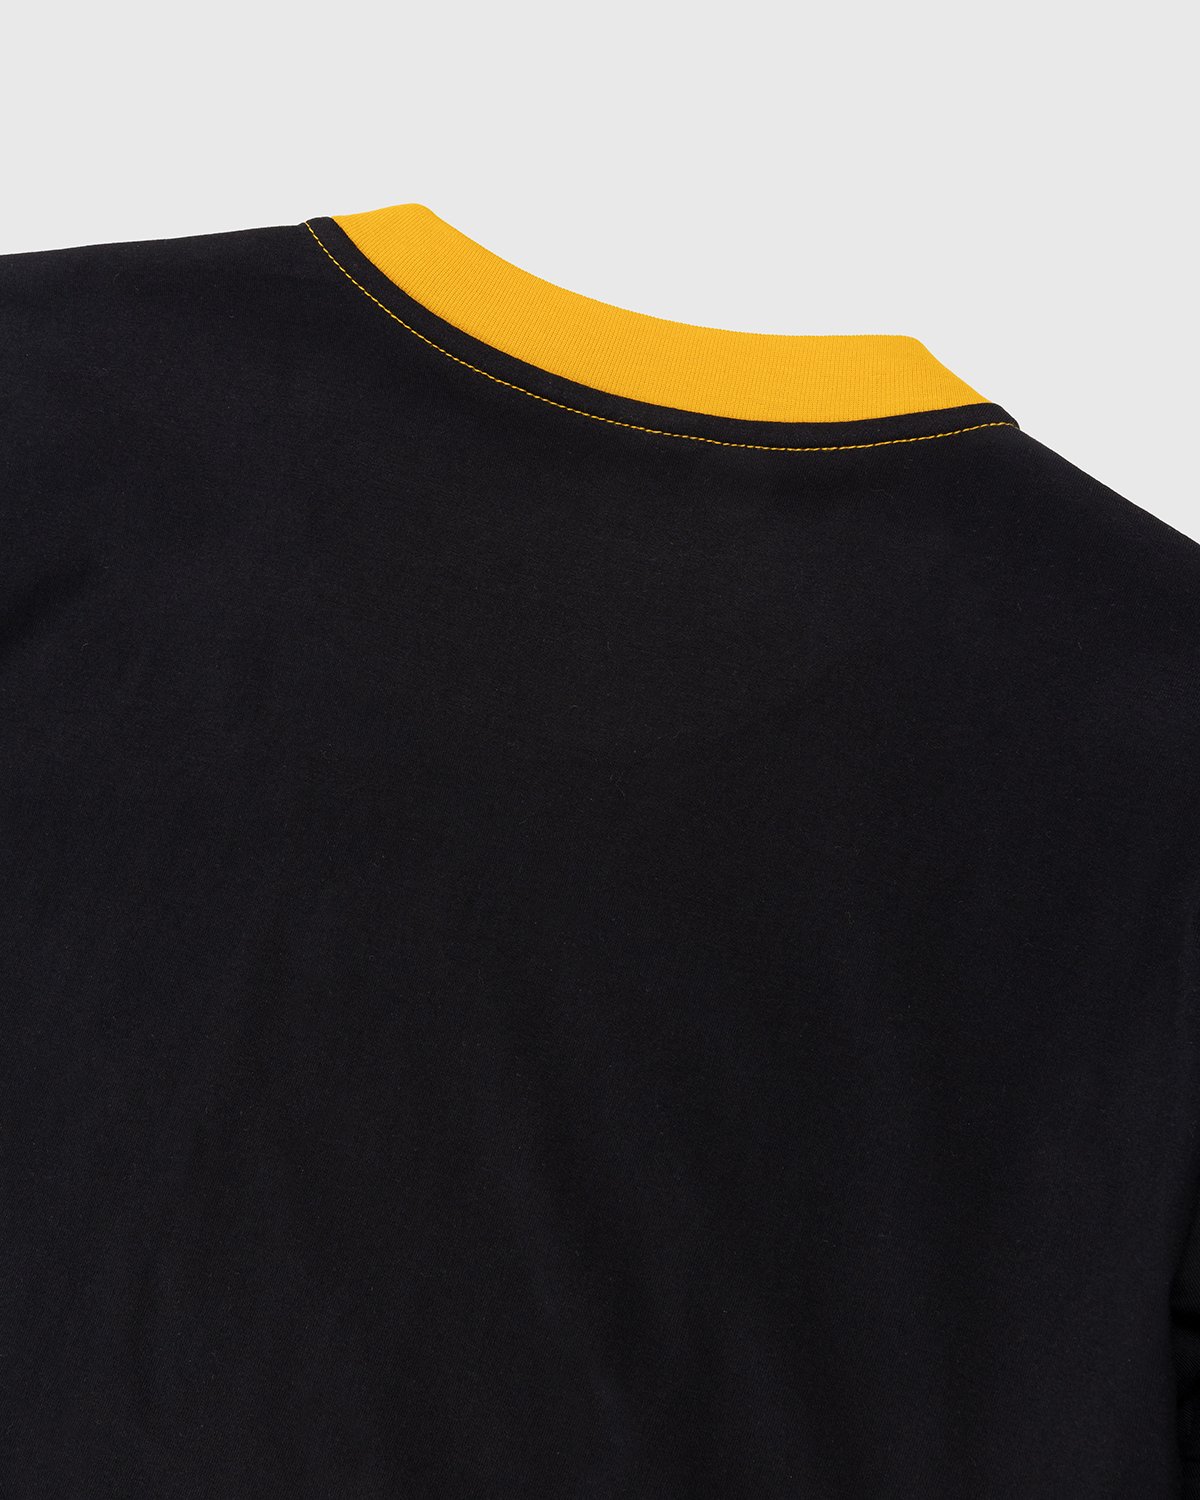 Marni - Stripe Logo Bio Jersey T-Shirt Black/Gold - Clothing - Yellow - Image 3